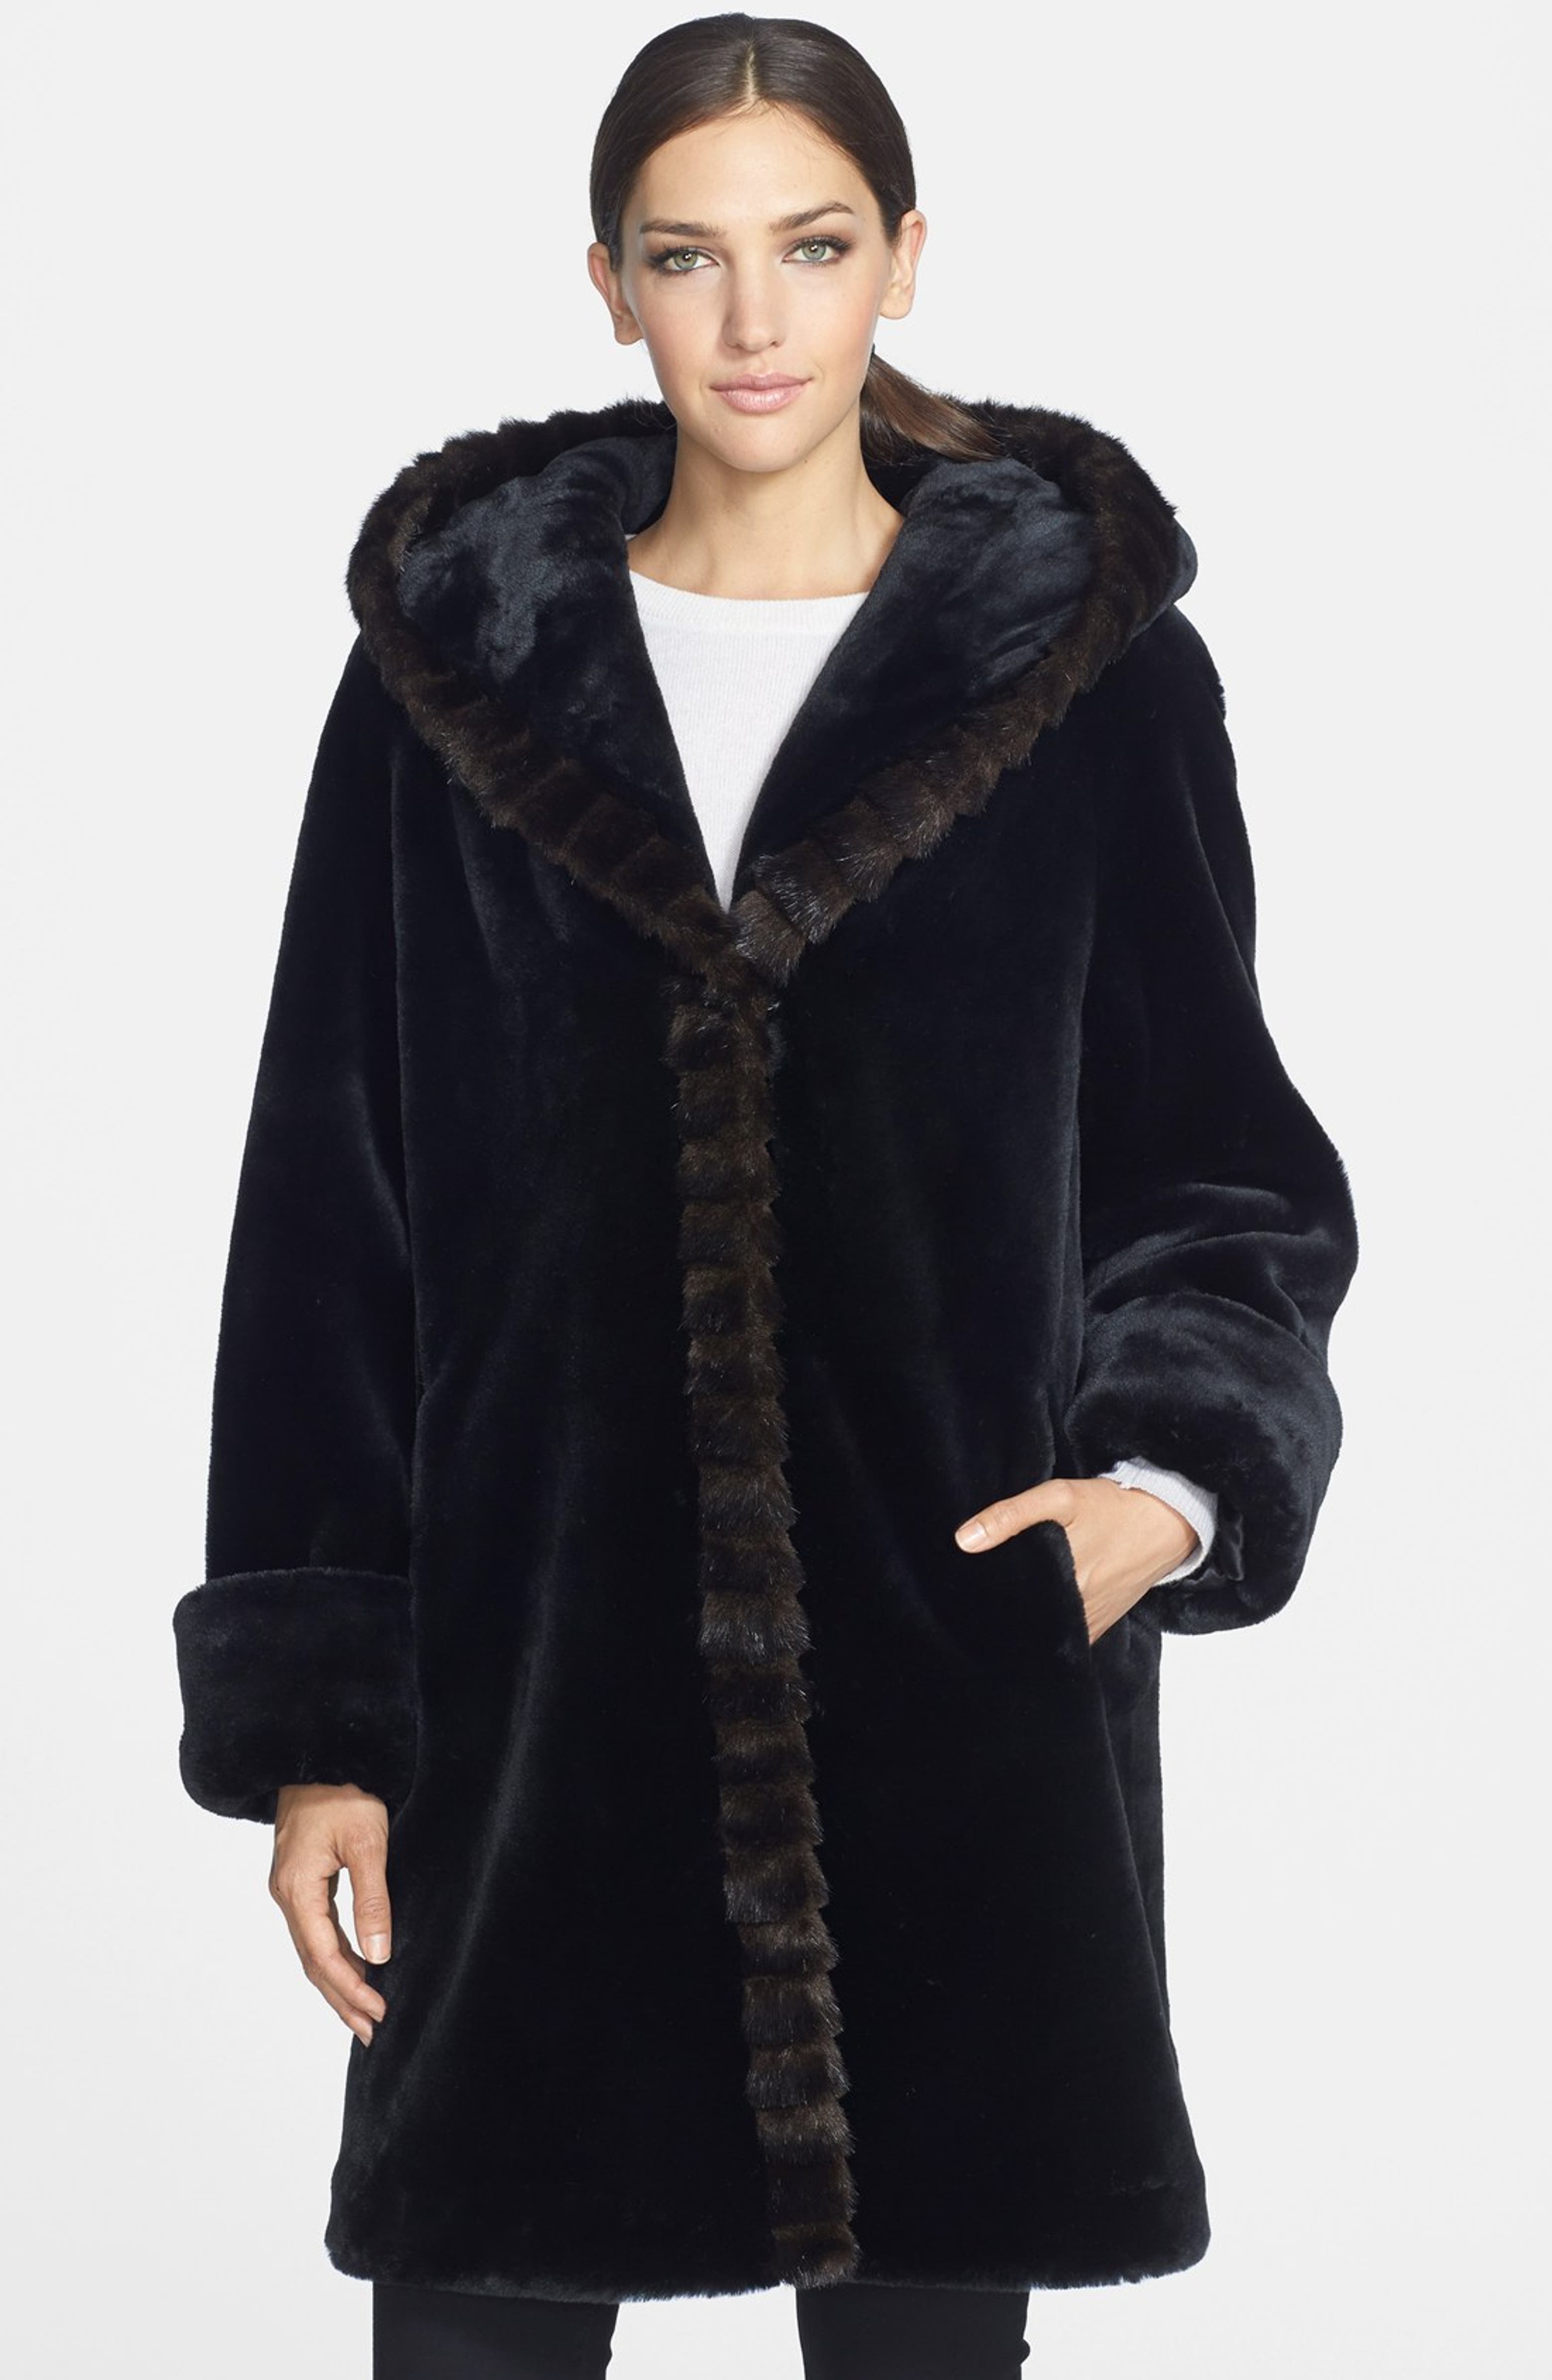 Gallery Hooded Faux Fur Walking Coat (Online Only) | Nordstrom